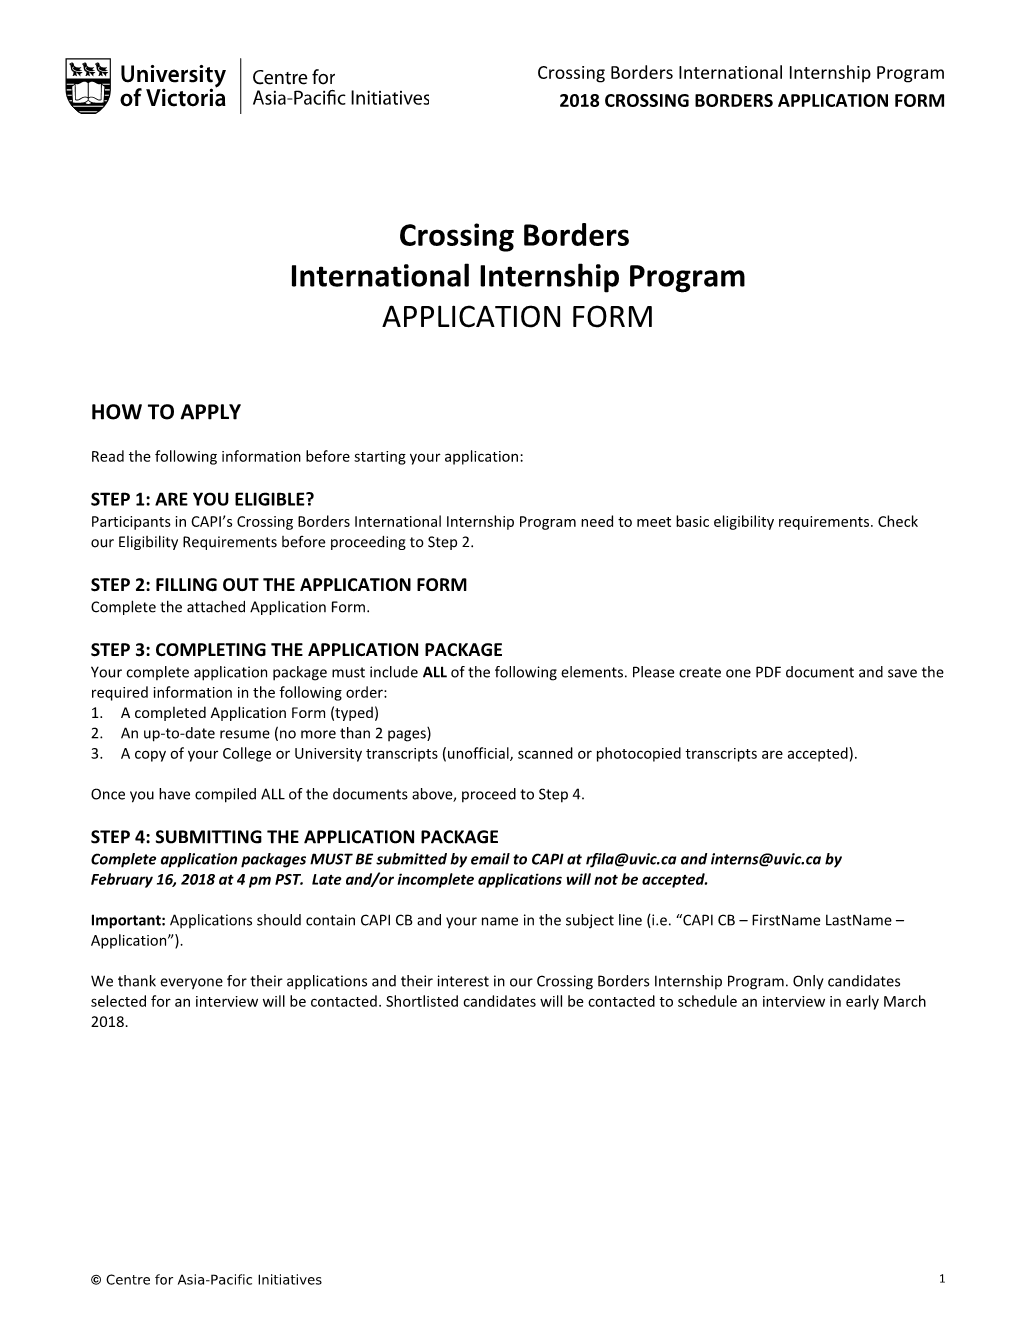 2018 Crossing Borders Application Form